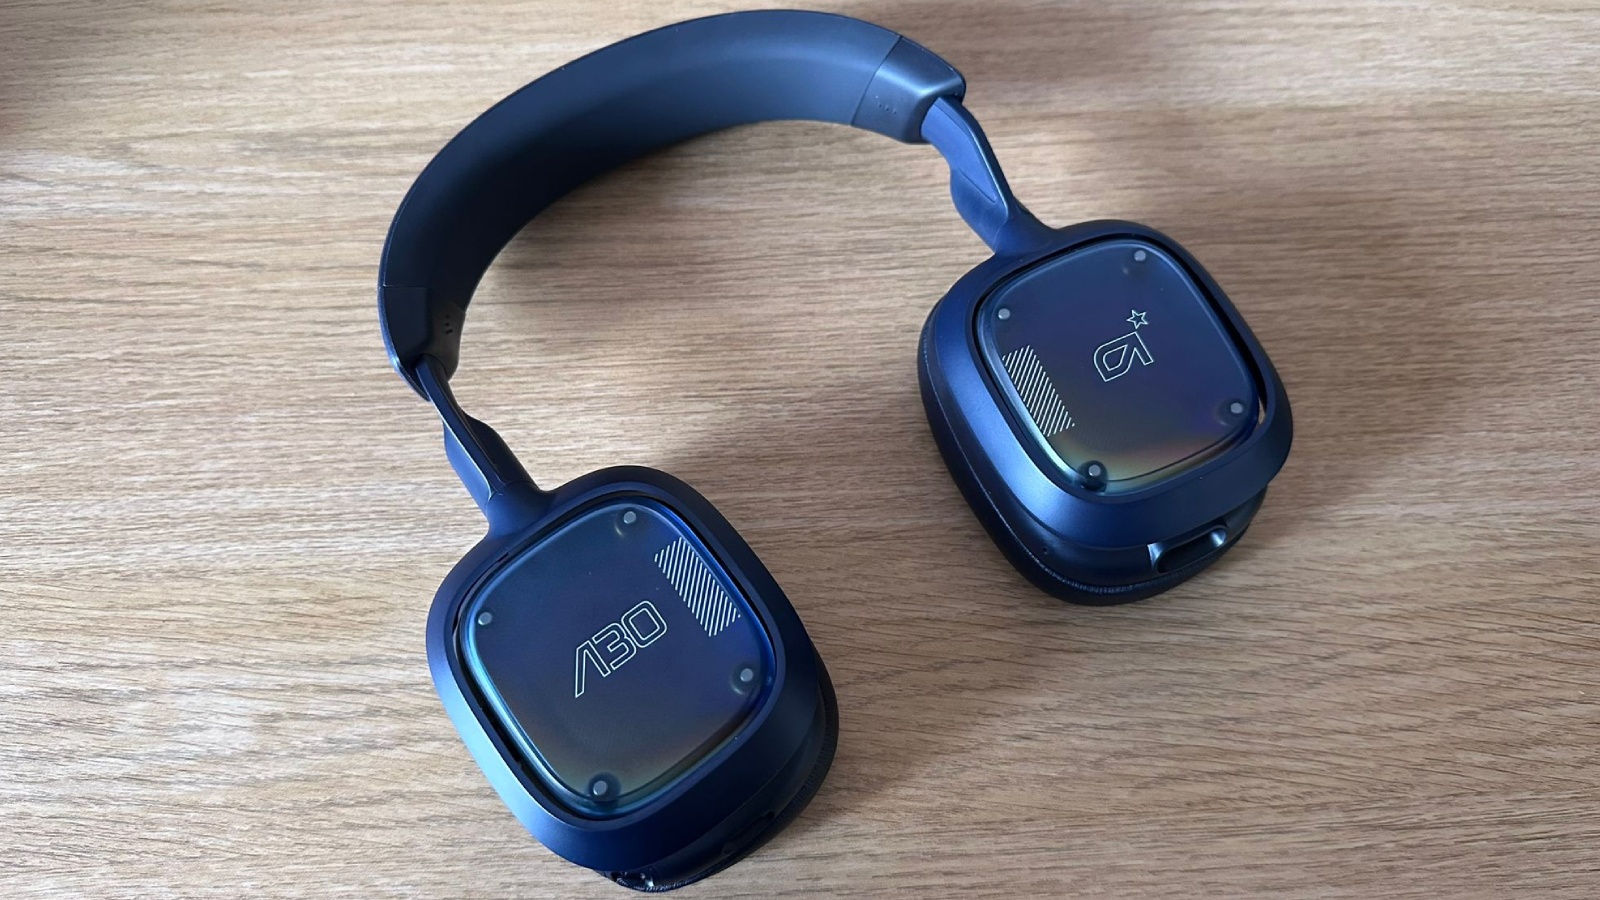 Astro A30 Gaming Headset Bluetooth/Wireless Navy - Jarir Bookstore KSA